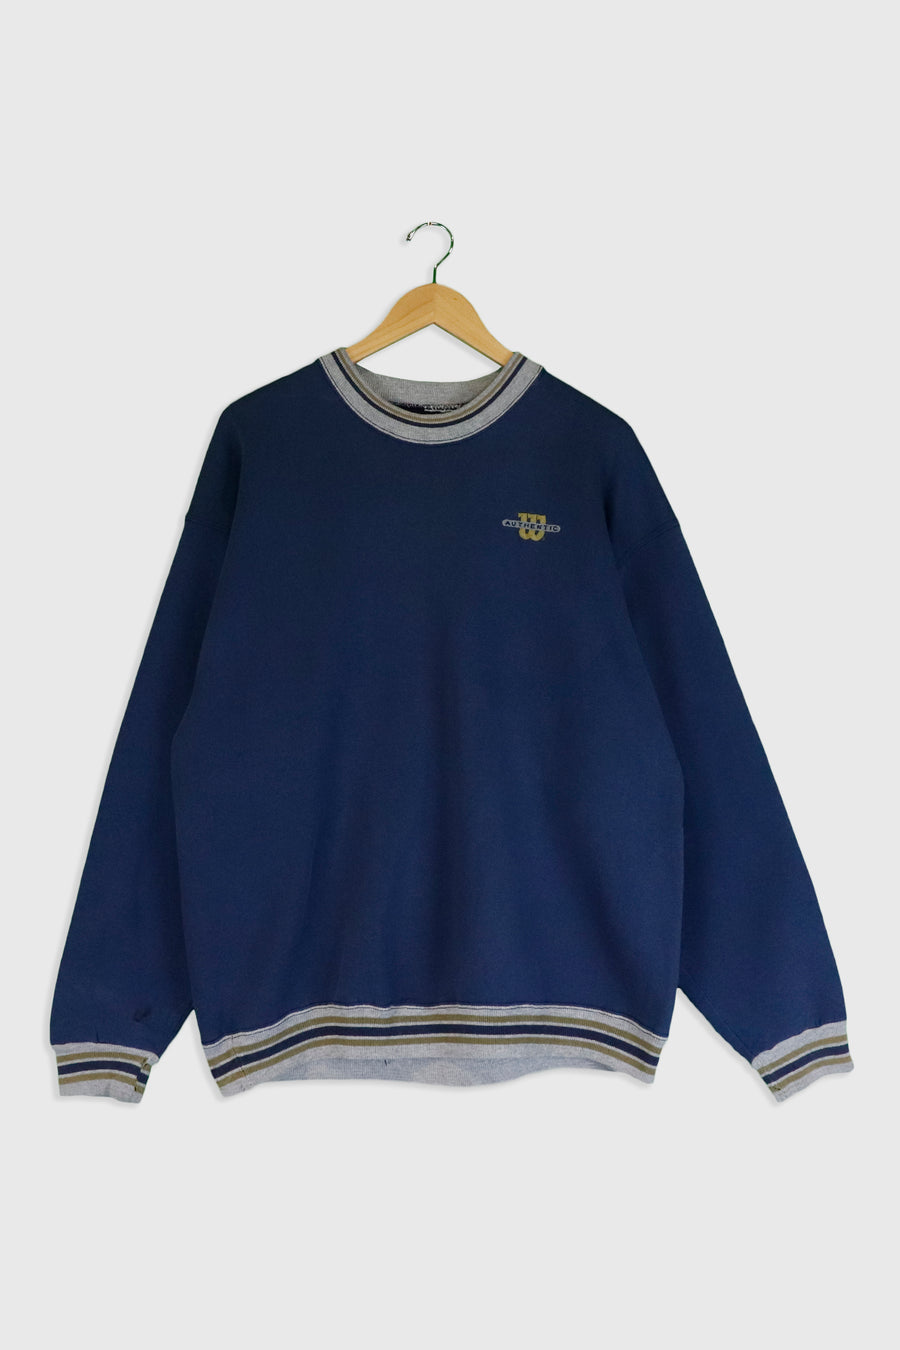 Vintage W Authentic Sweatshirt Sz XL